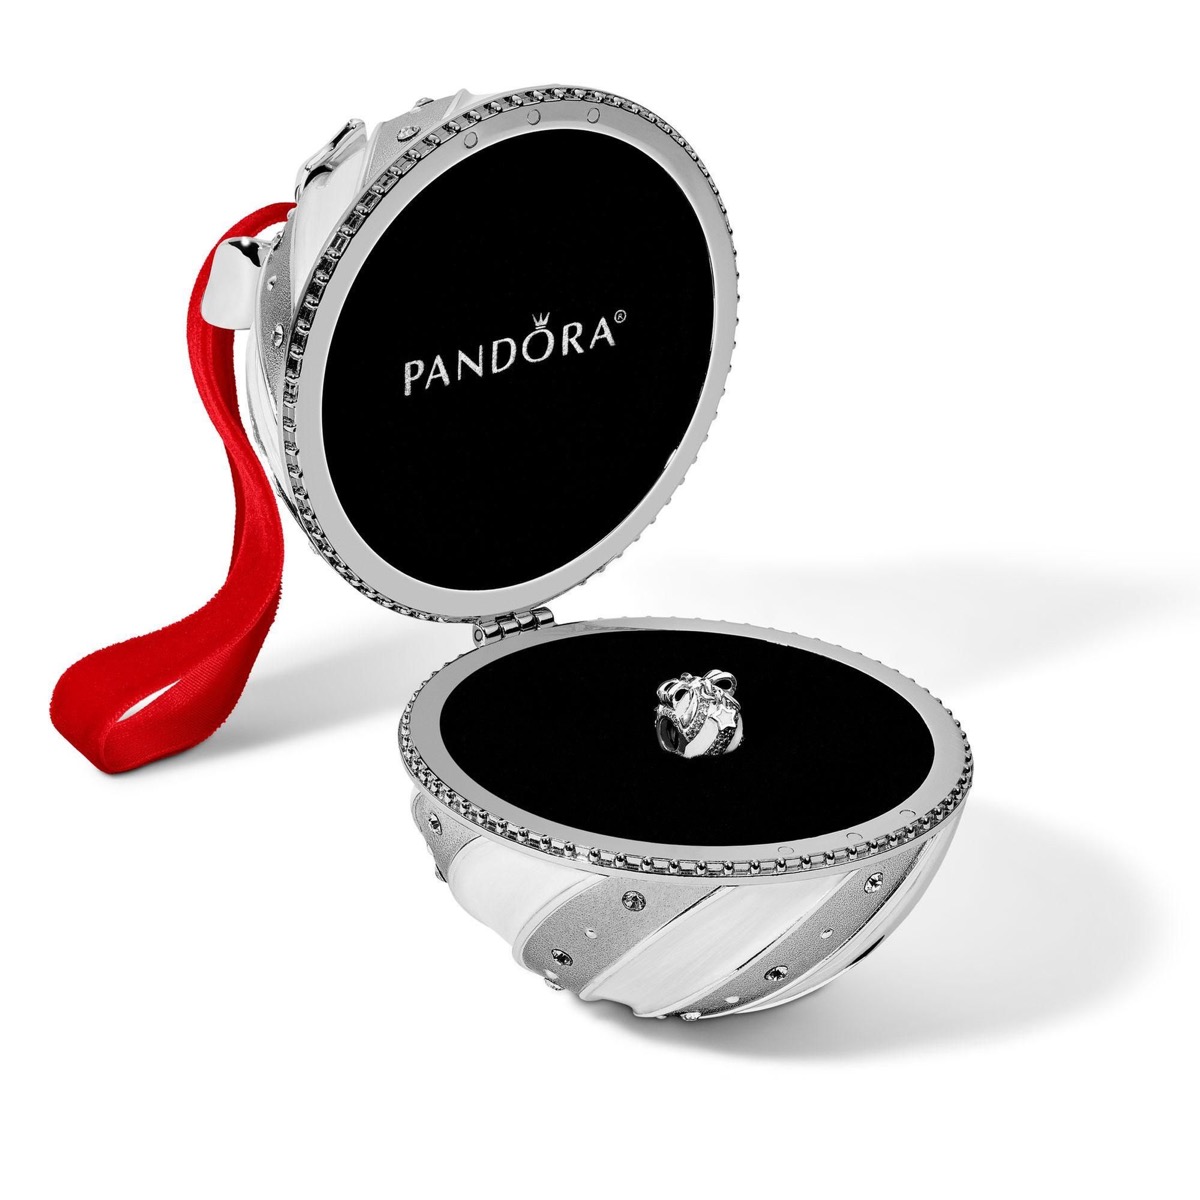 Pandora Charm and Ornament {Christmas Gift Ideas}